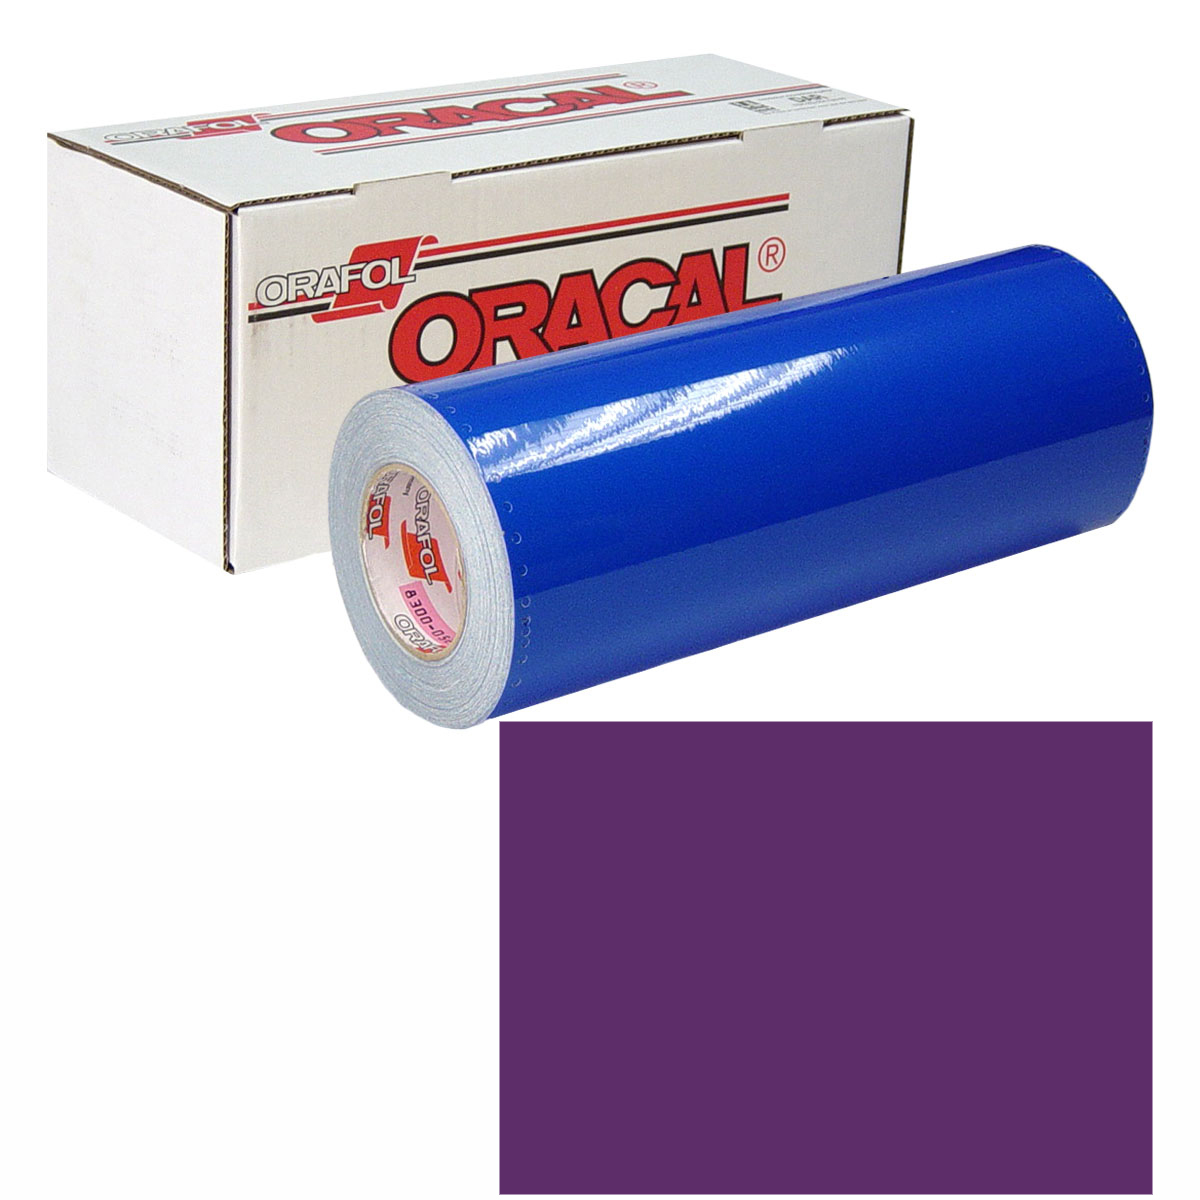 ORACAL 631 30in X 10yd 040 Violet